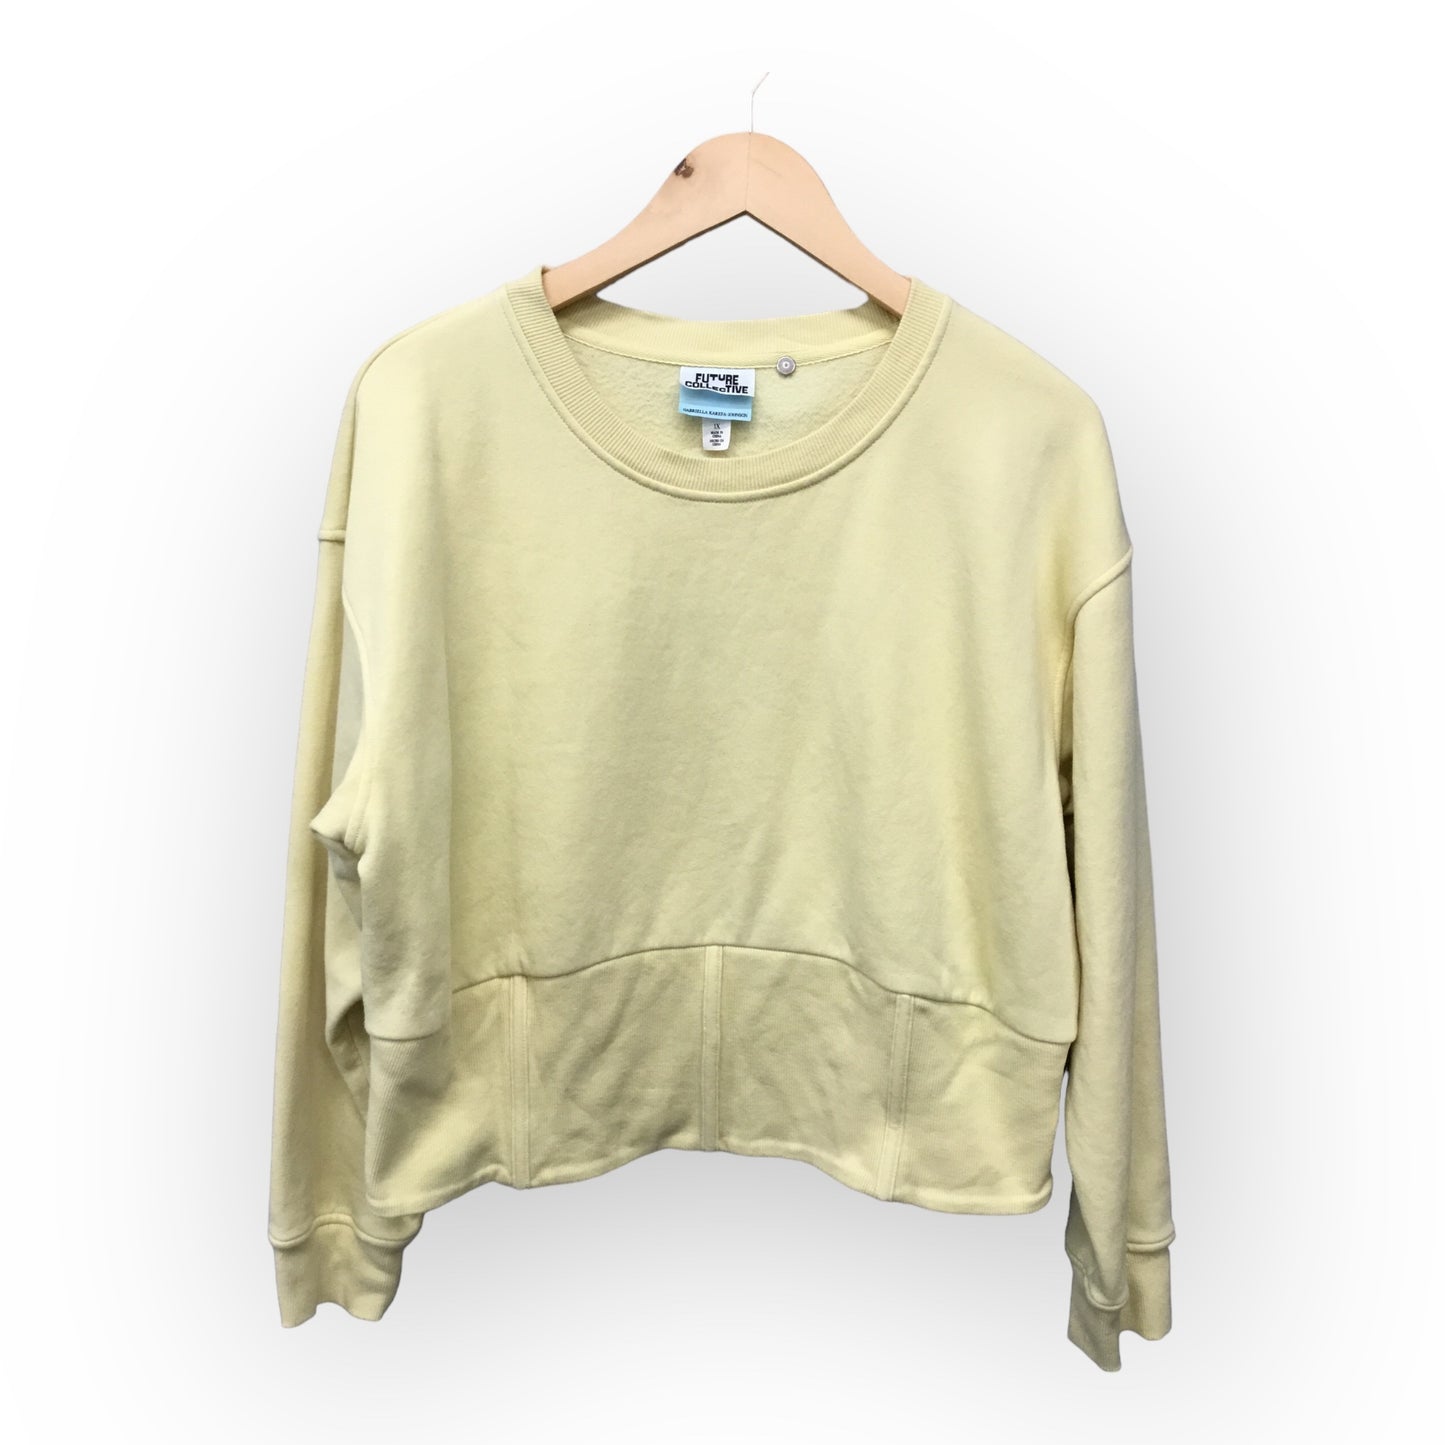 Sweatshirt Crewneck By Clothes Mentor  Size: 1x